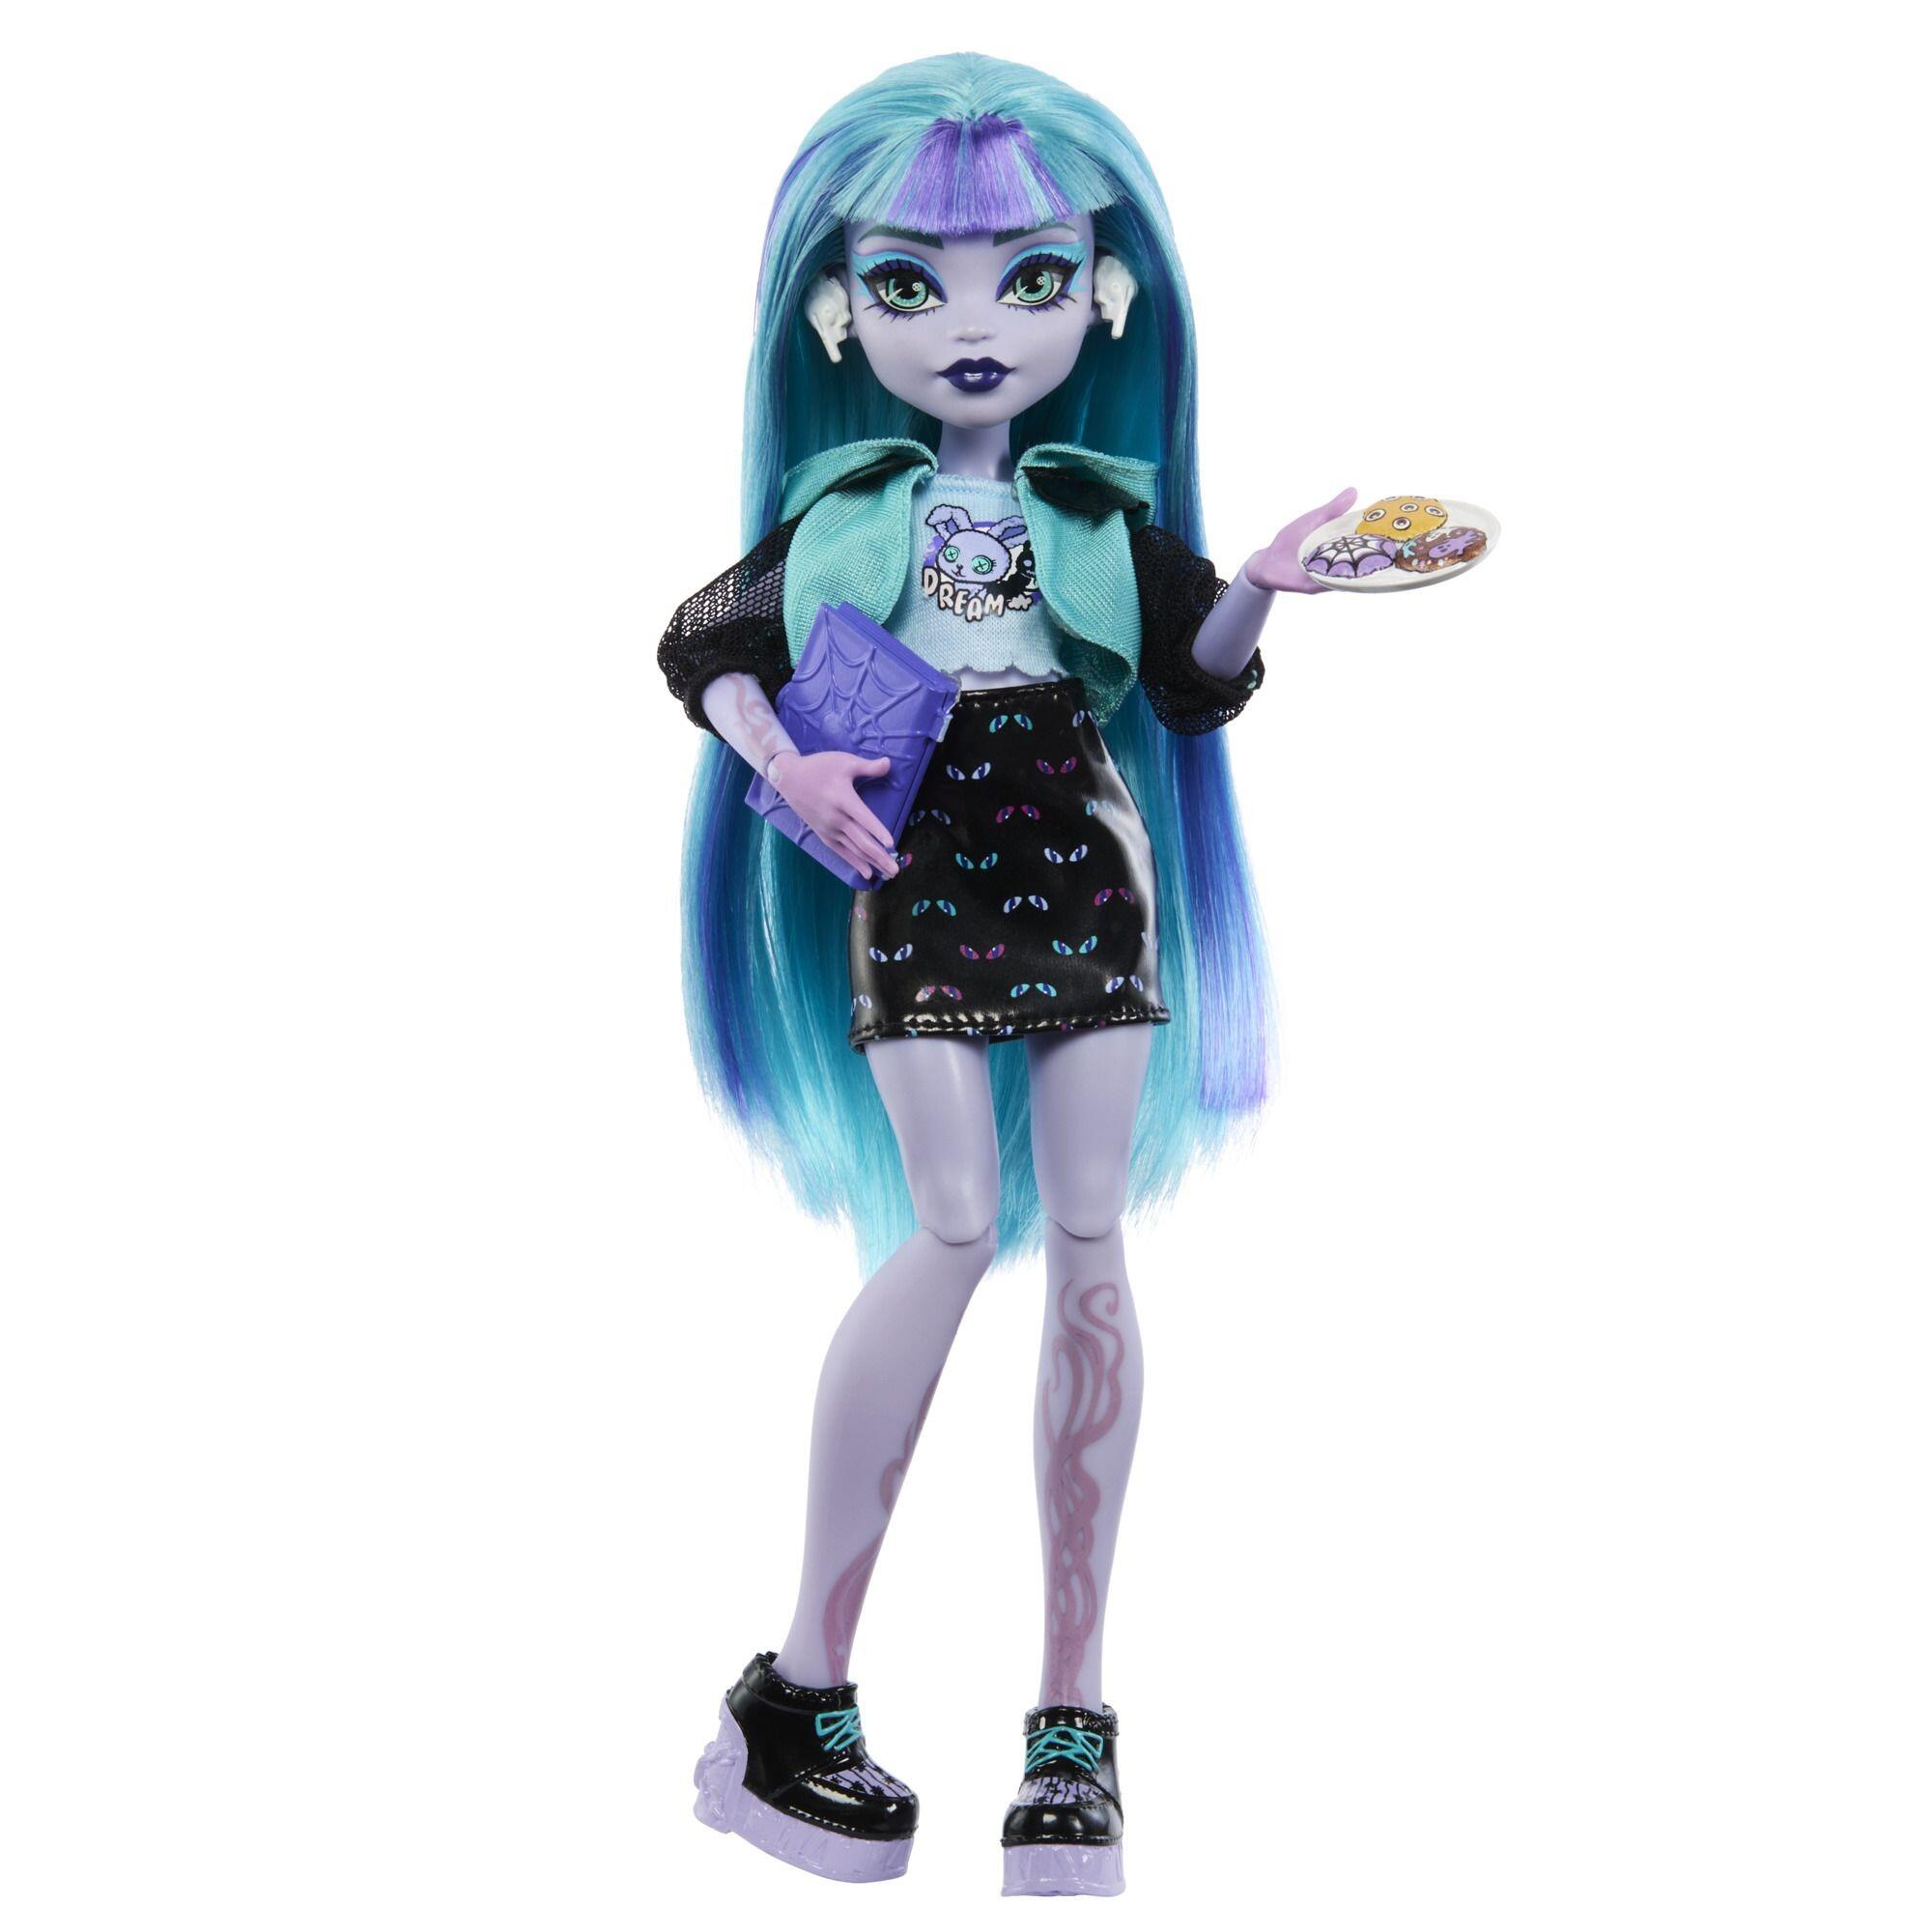 Monster High Skulltimate Secrets Neon Frights Twyla Series 3 Fashion Doll